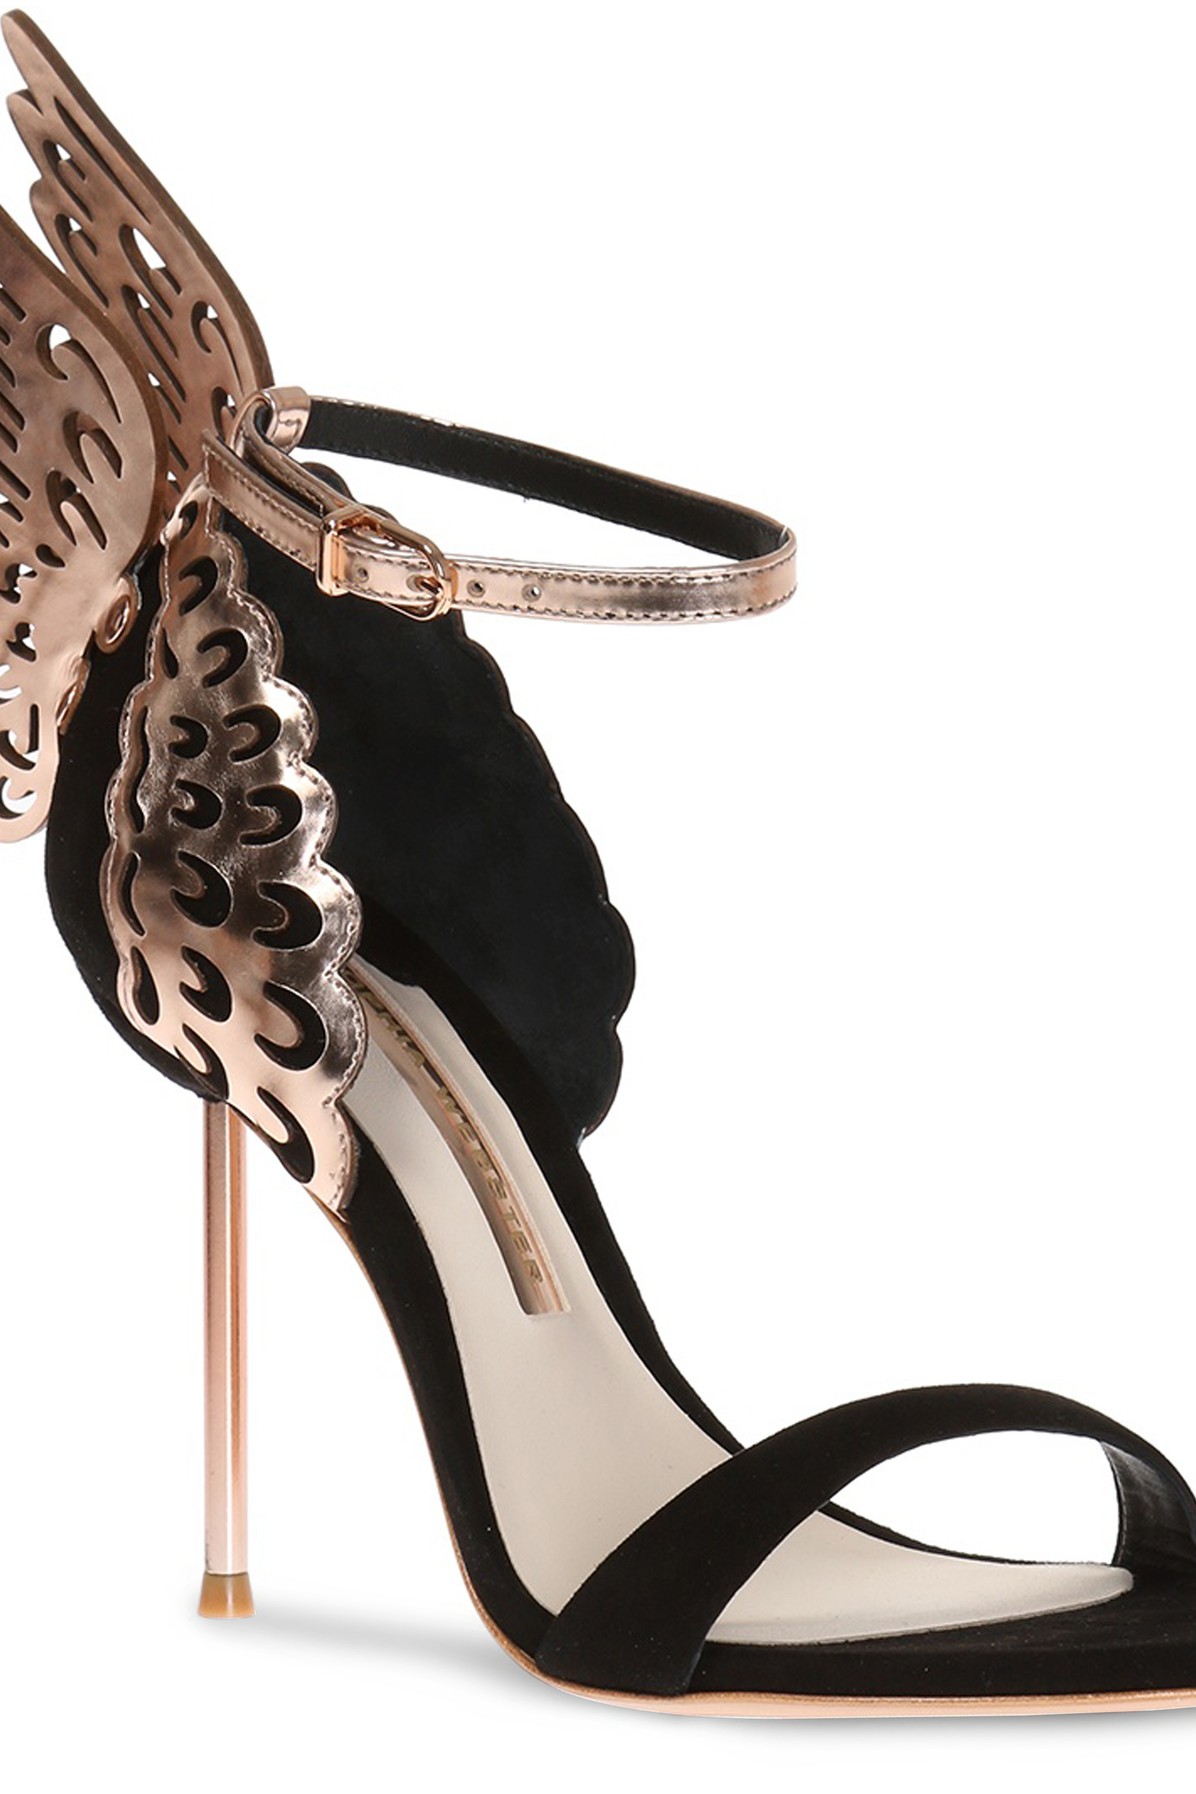 Sophia Webster 'Evangeline' stiletto heel sandals